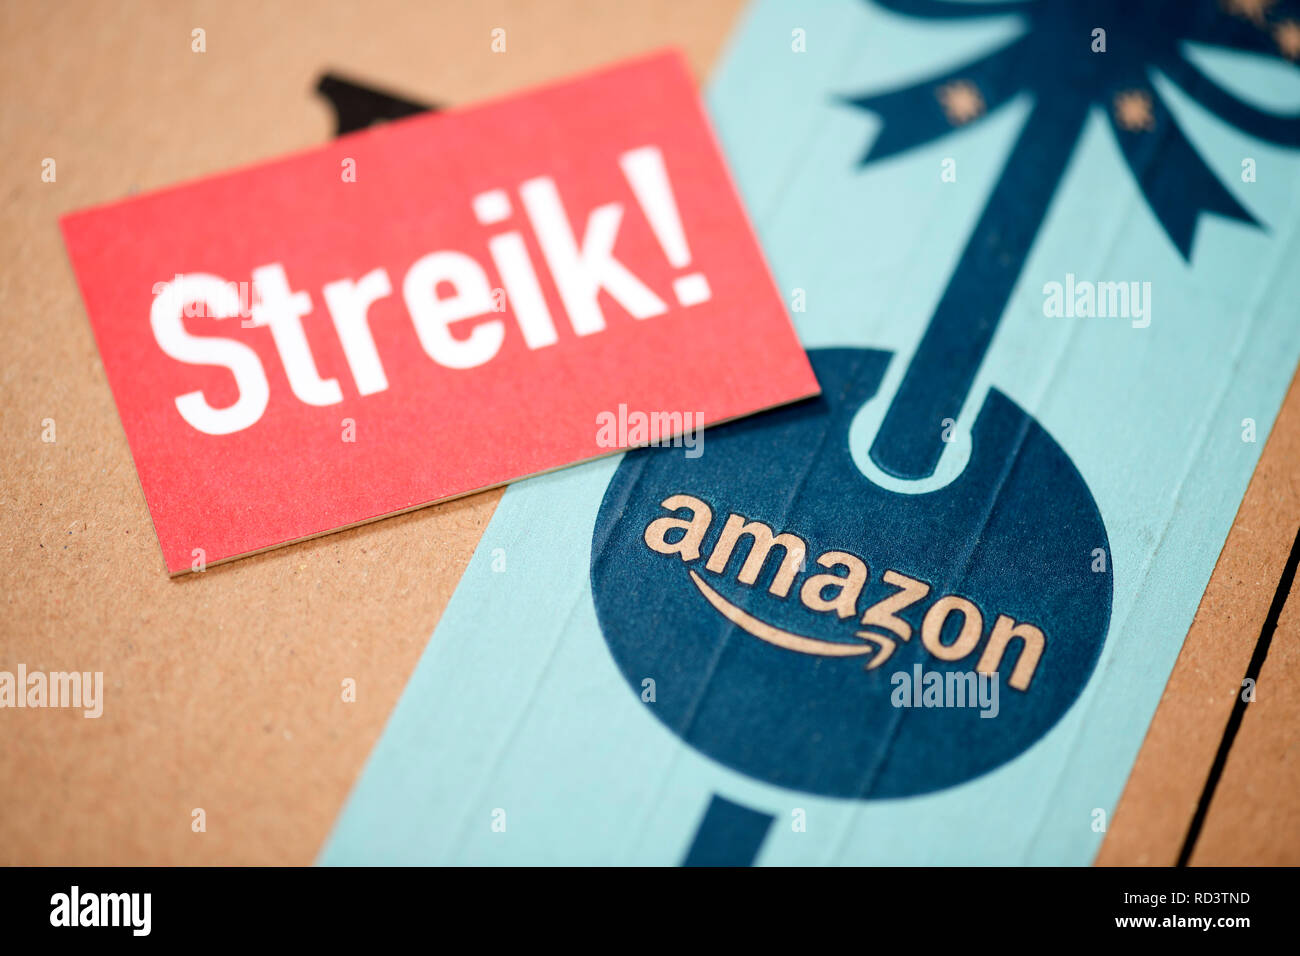 Streik Zeichen auf Amazon Paket, mit Streik-Schild Amazon-Paket  Stockfotografie - Alamy